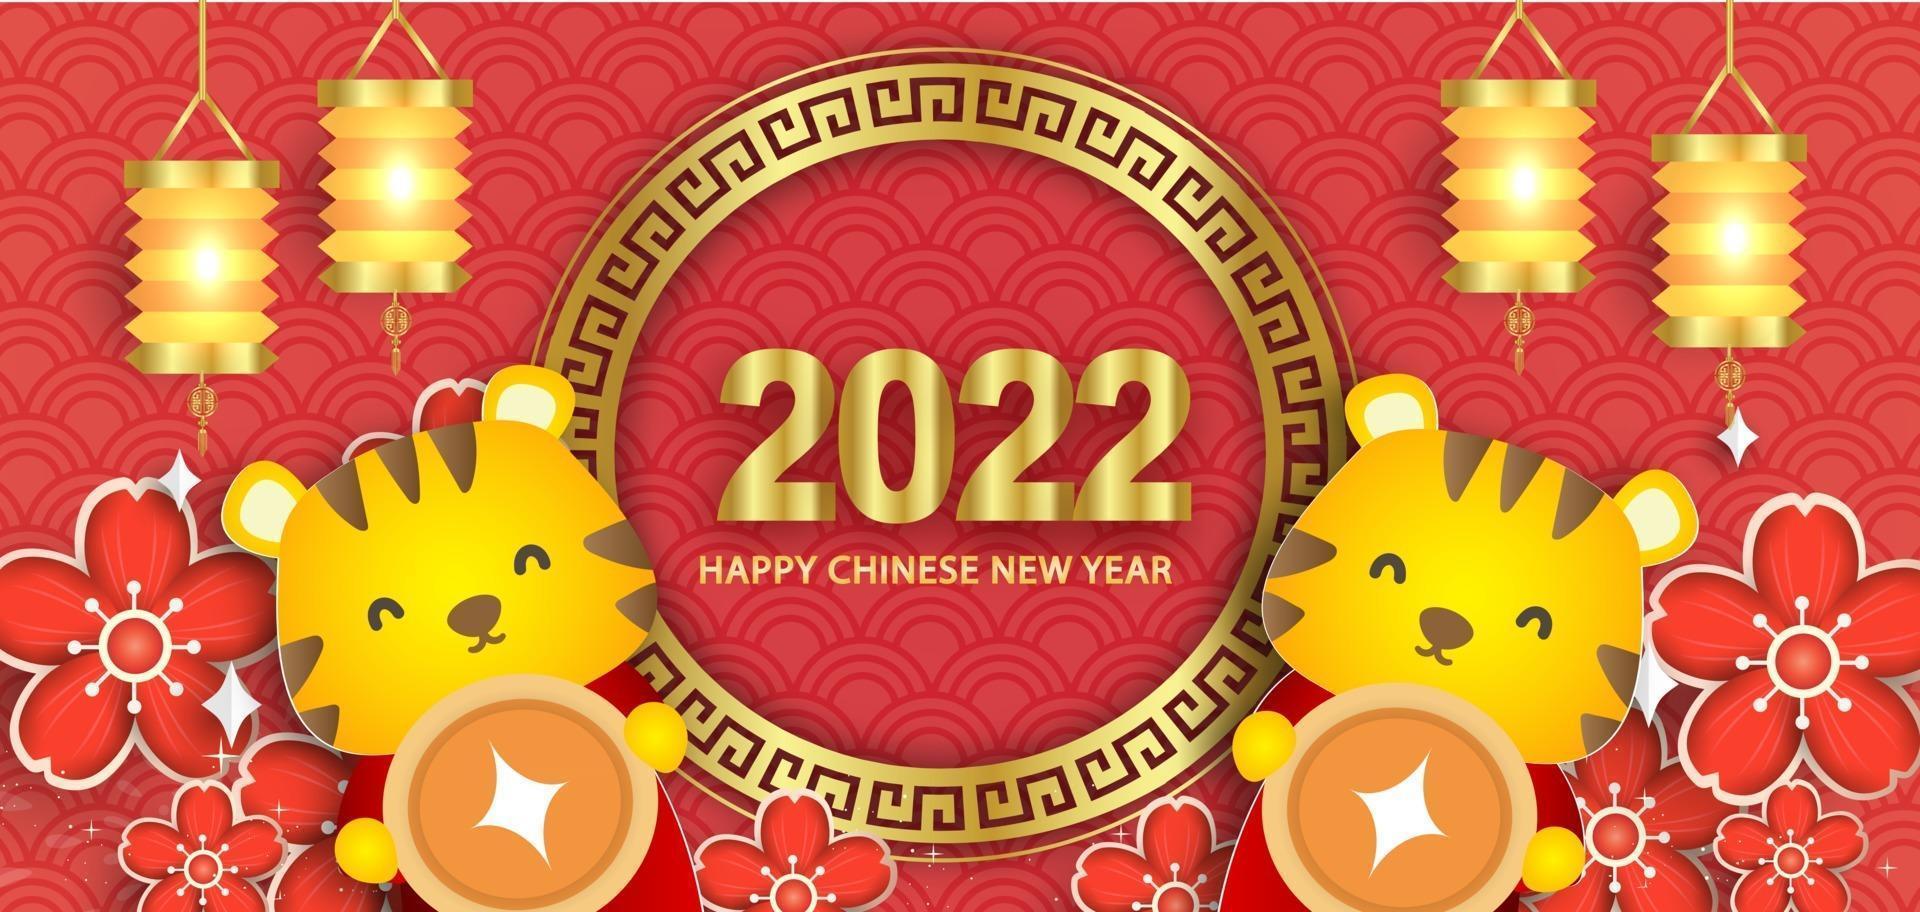 ano novo chinês 2022 ano da bandeira do tigre. vetor